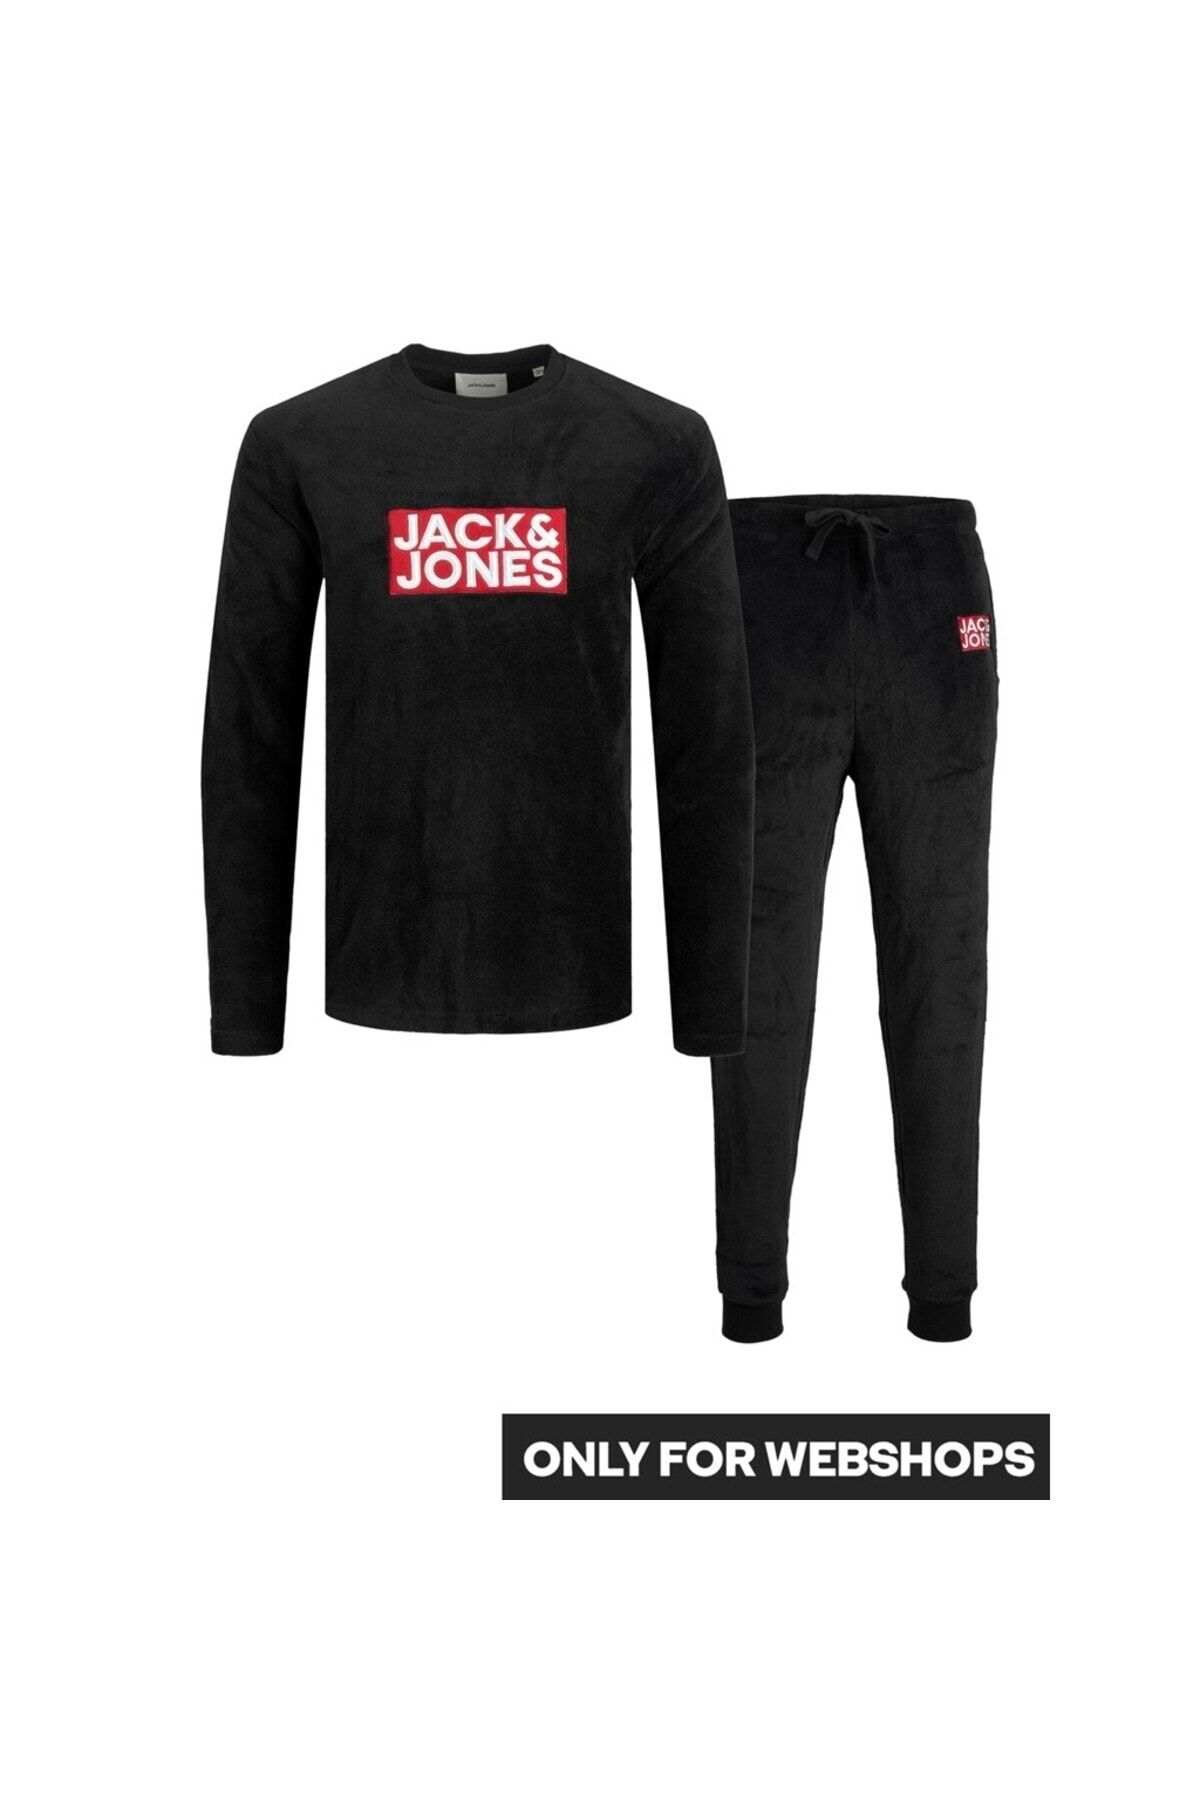 Jack & Jones Jacfleece Lw Set Erkek Eşofman - 12224985 Black Black